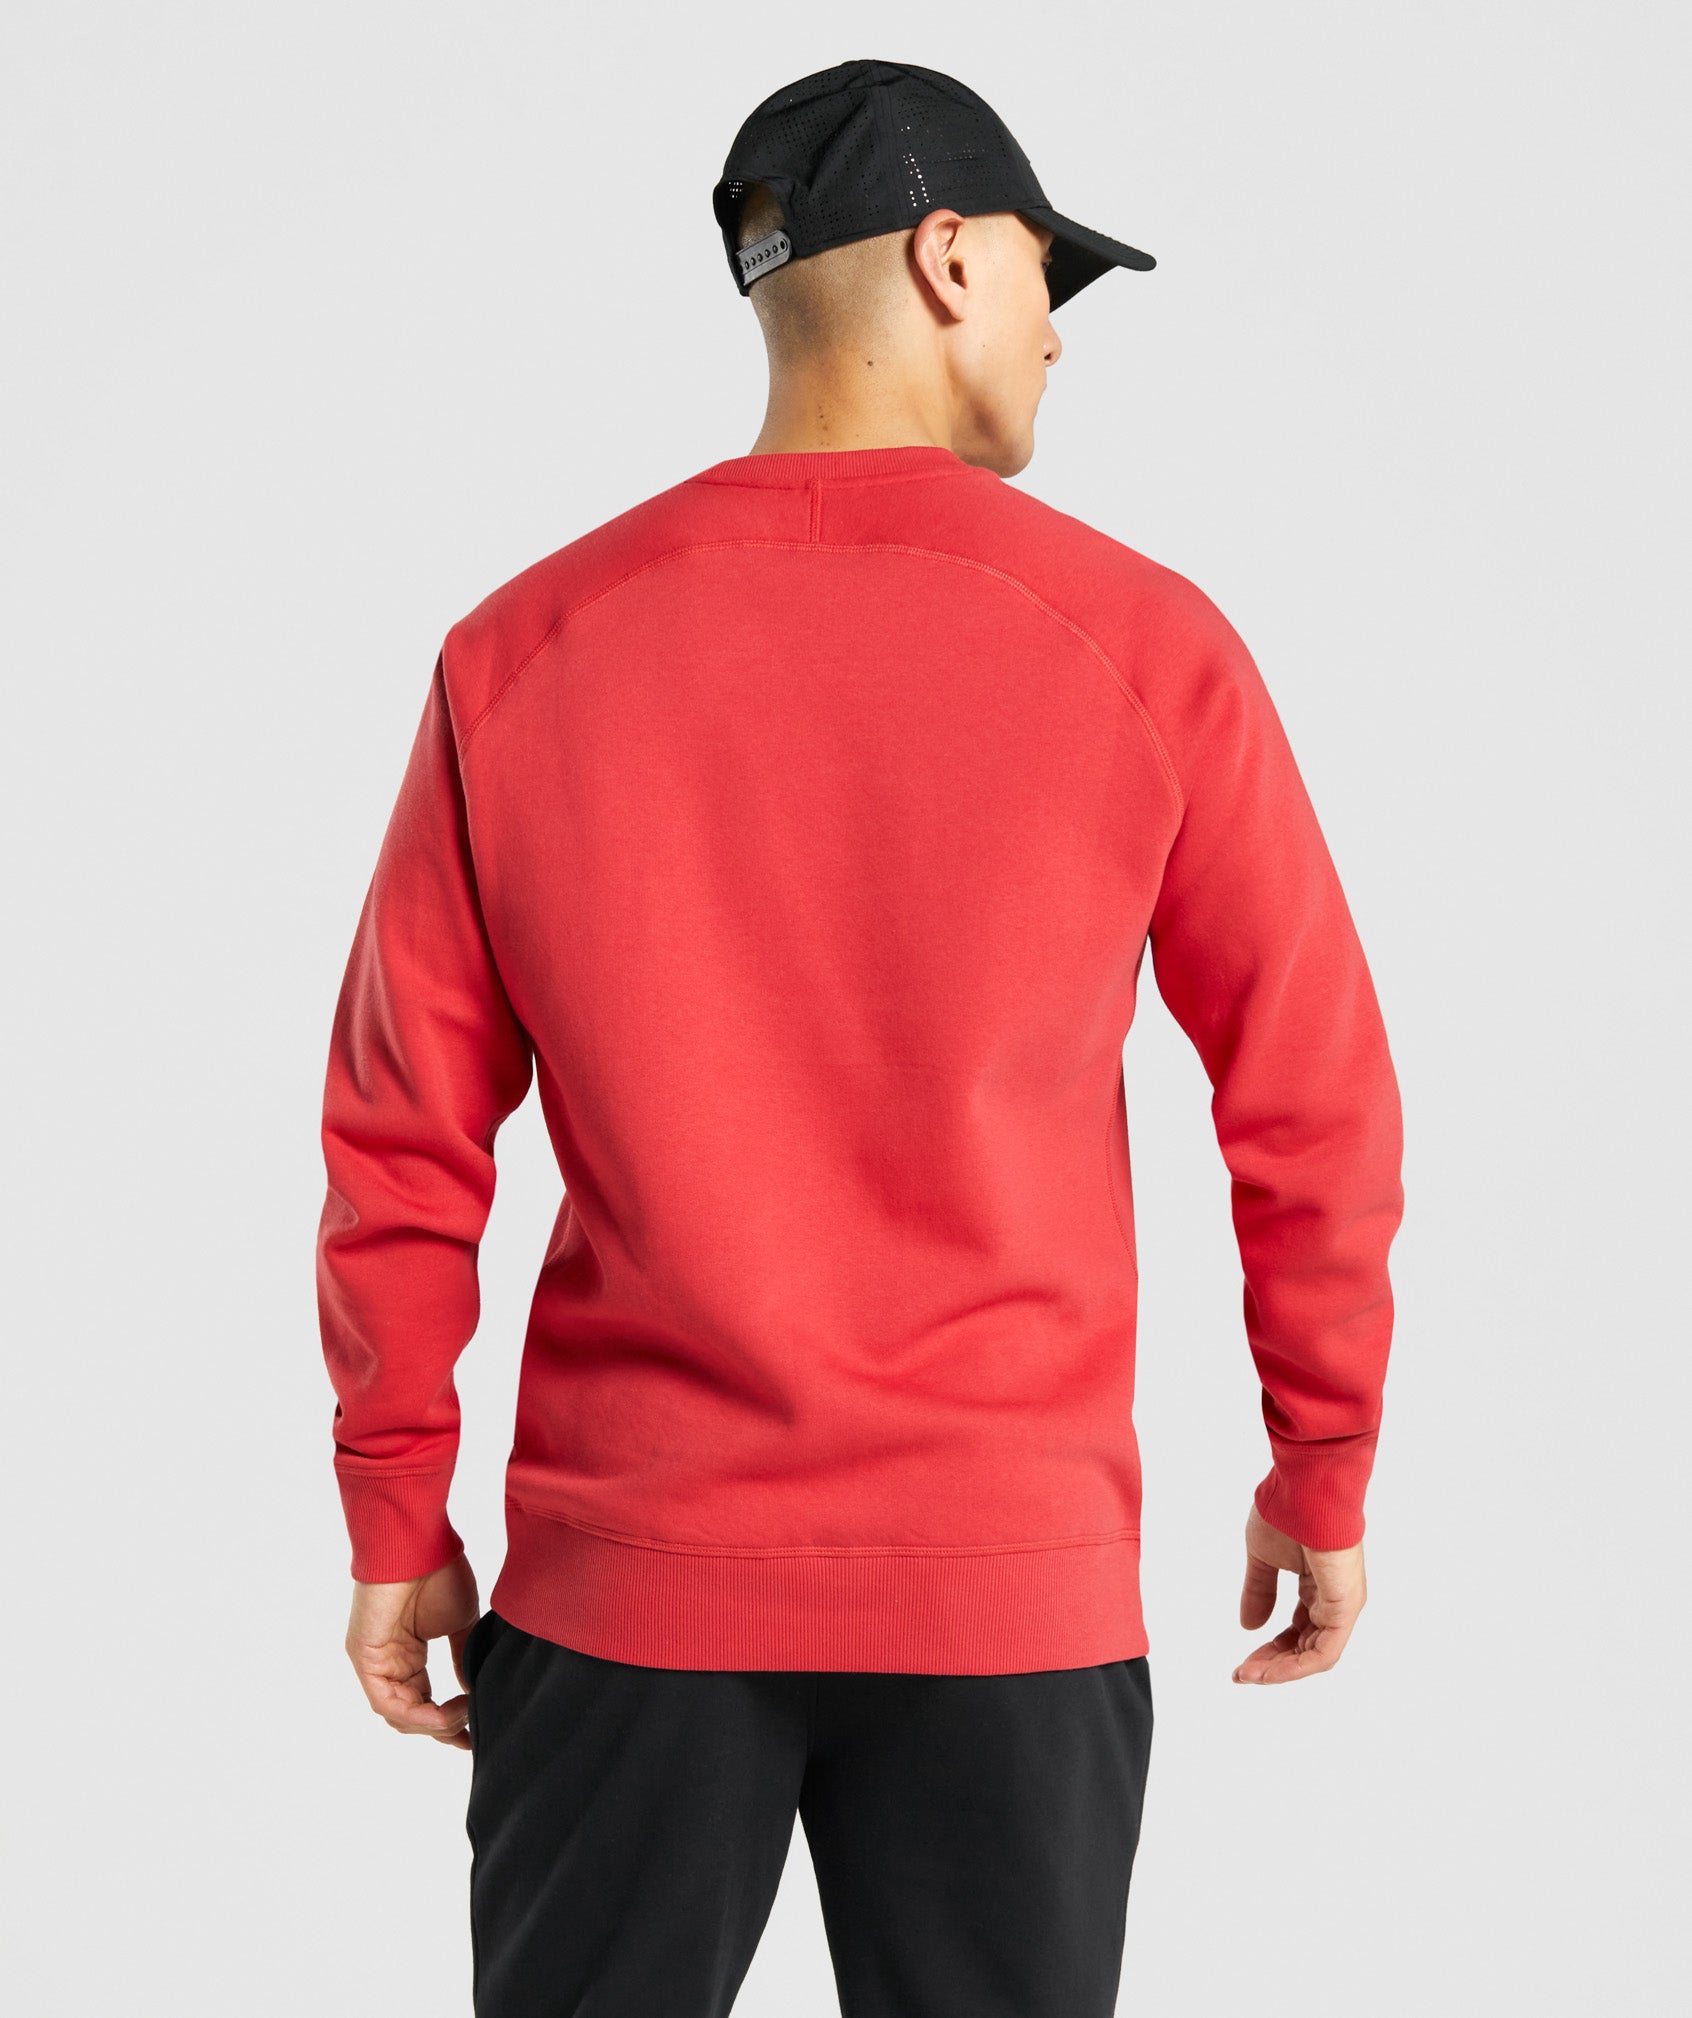 Crest Sweatshirt in Red